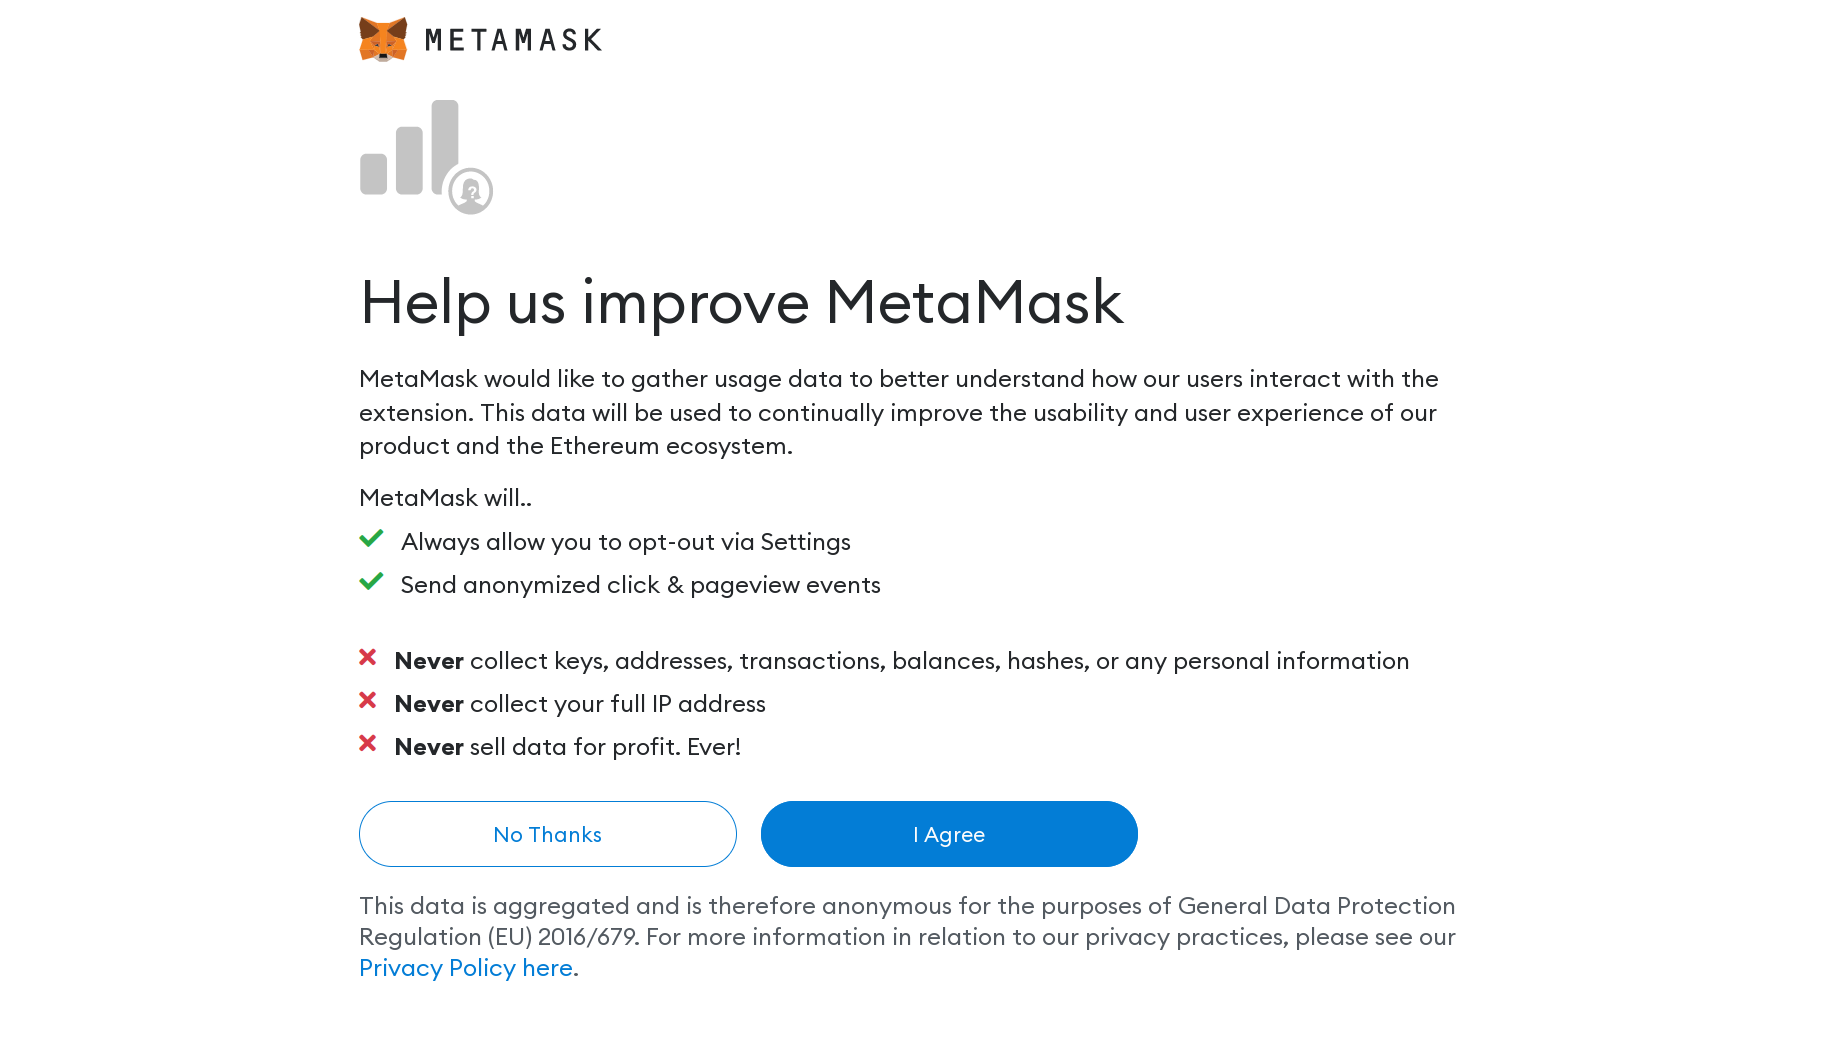 MetaMask Help Improve Message Prompt